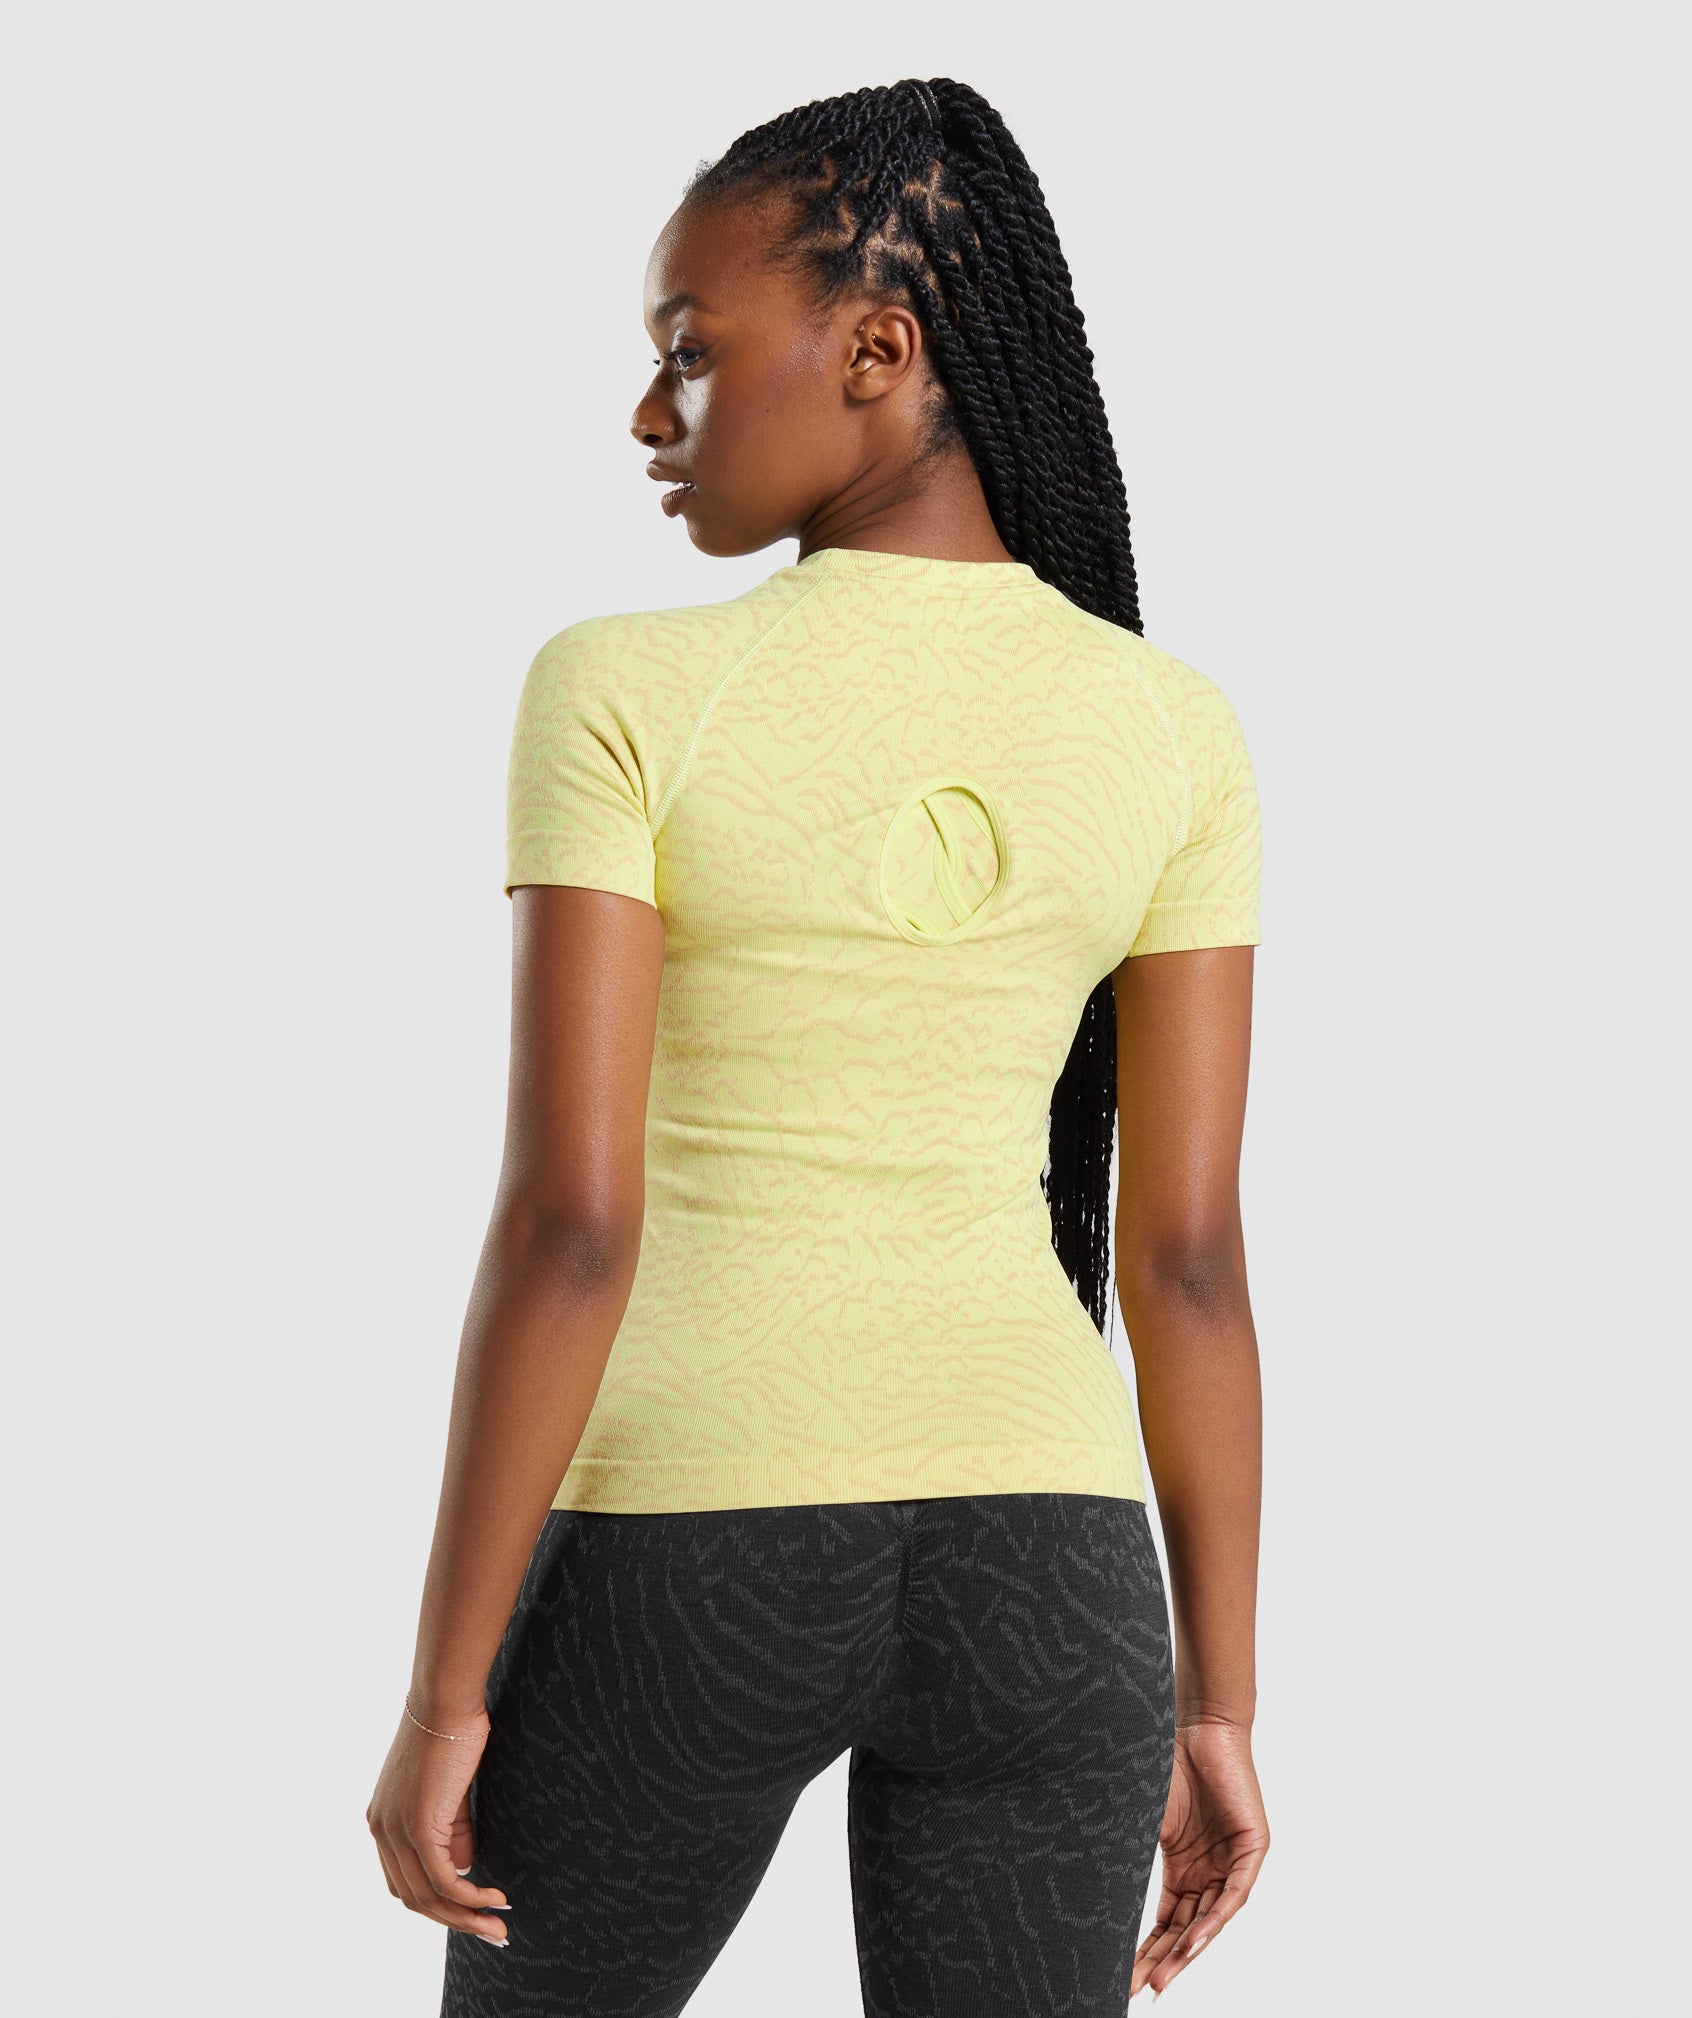 Adapt Animal Seamless T-Shirt in Hybrid | Firefly Yellow - view 2